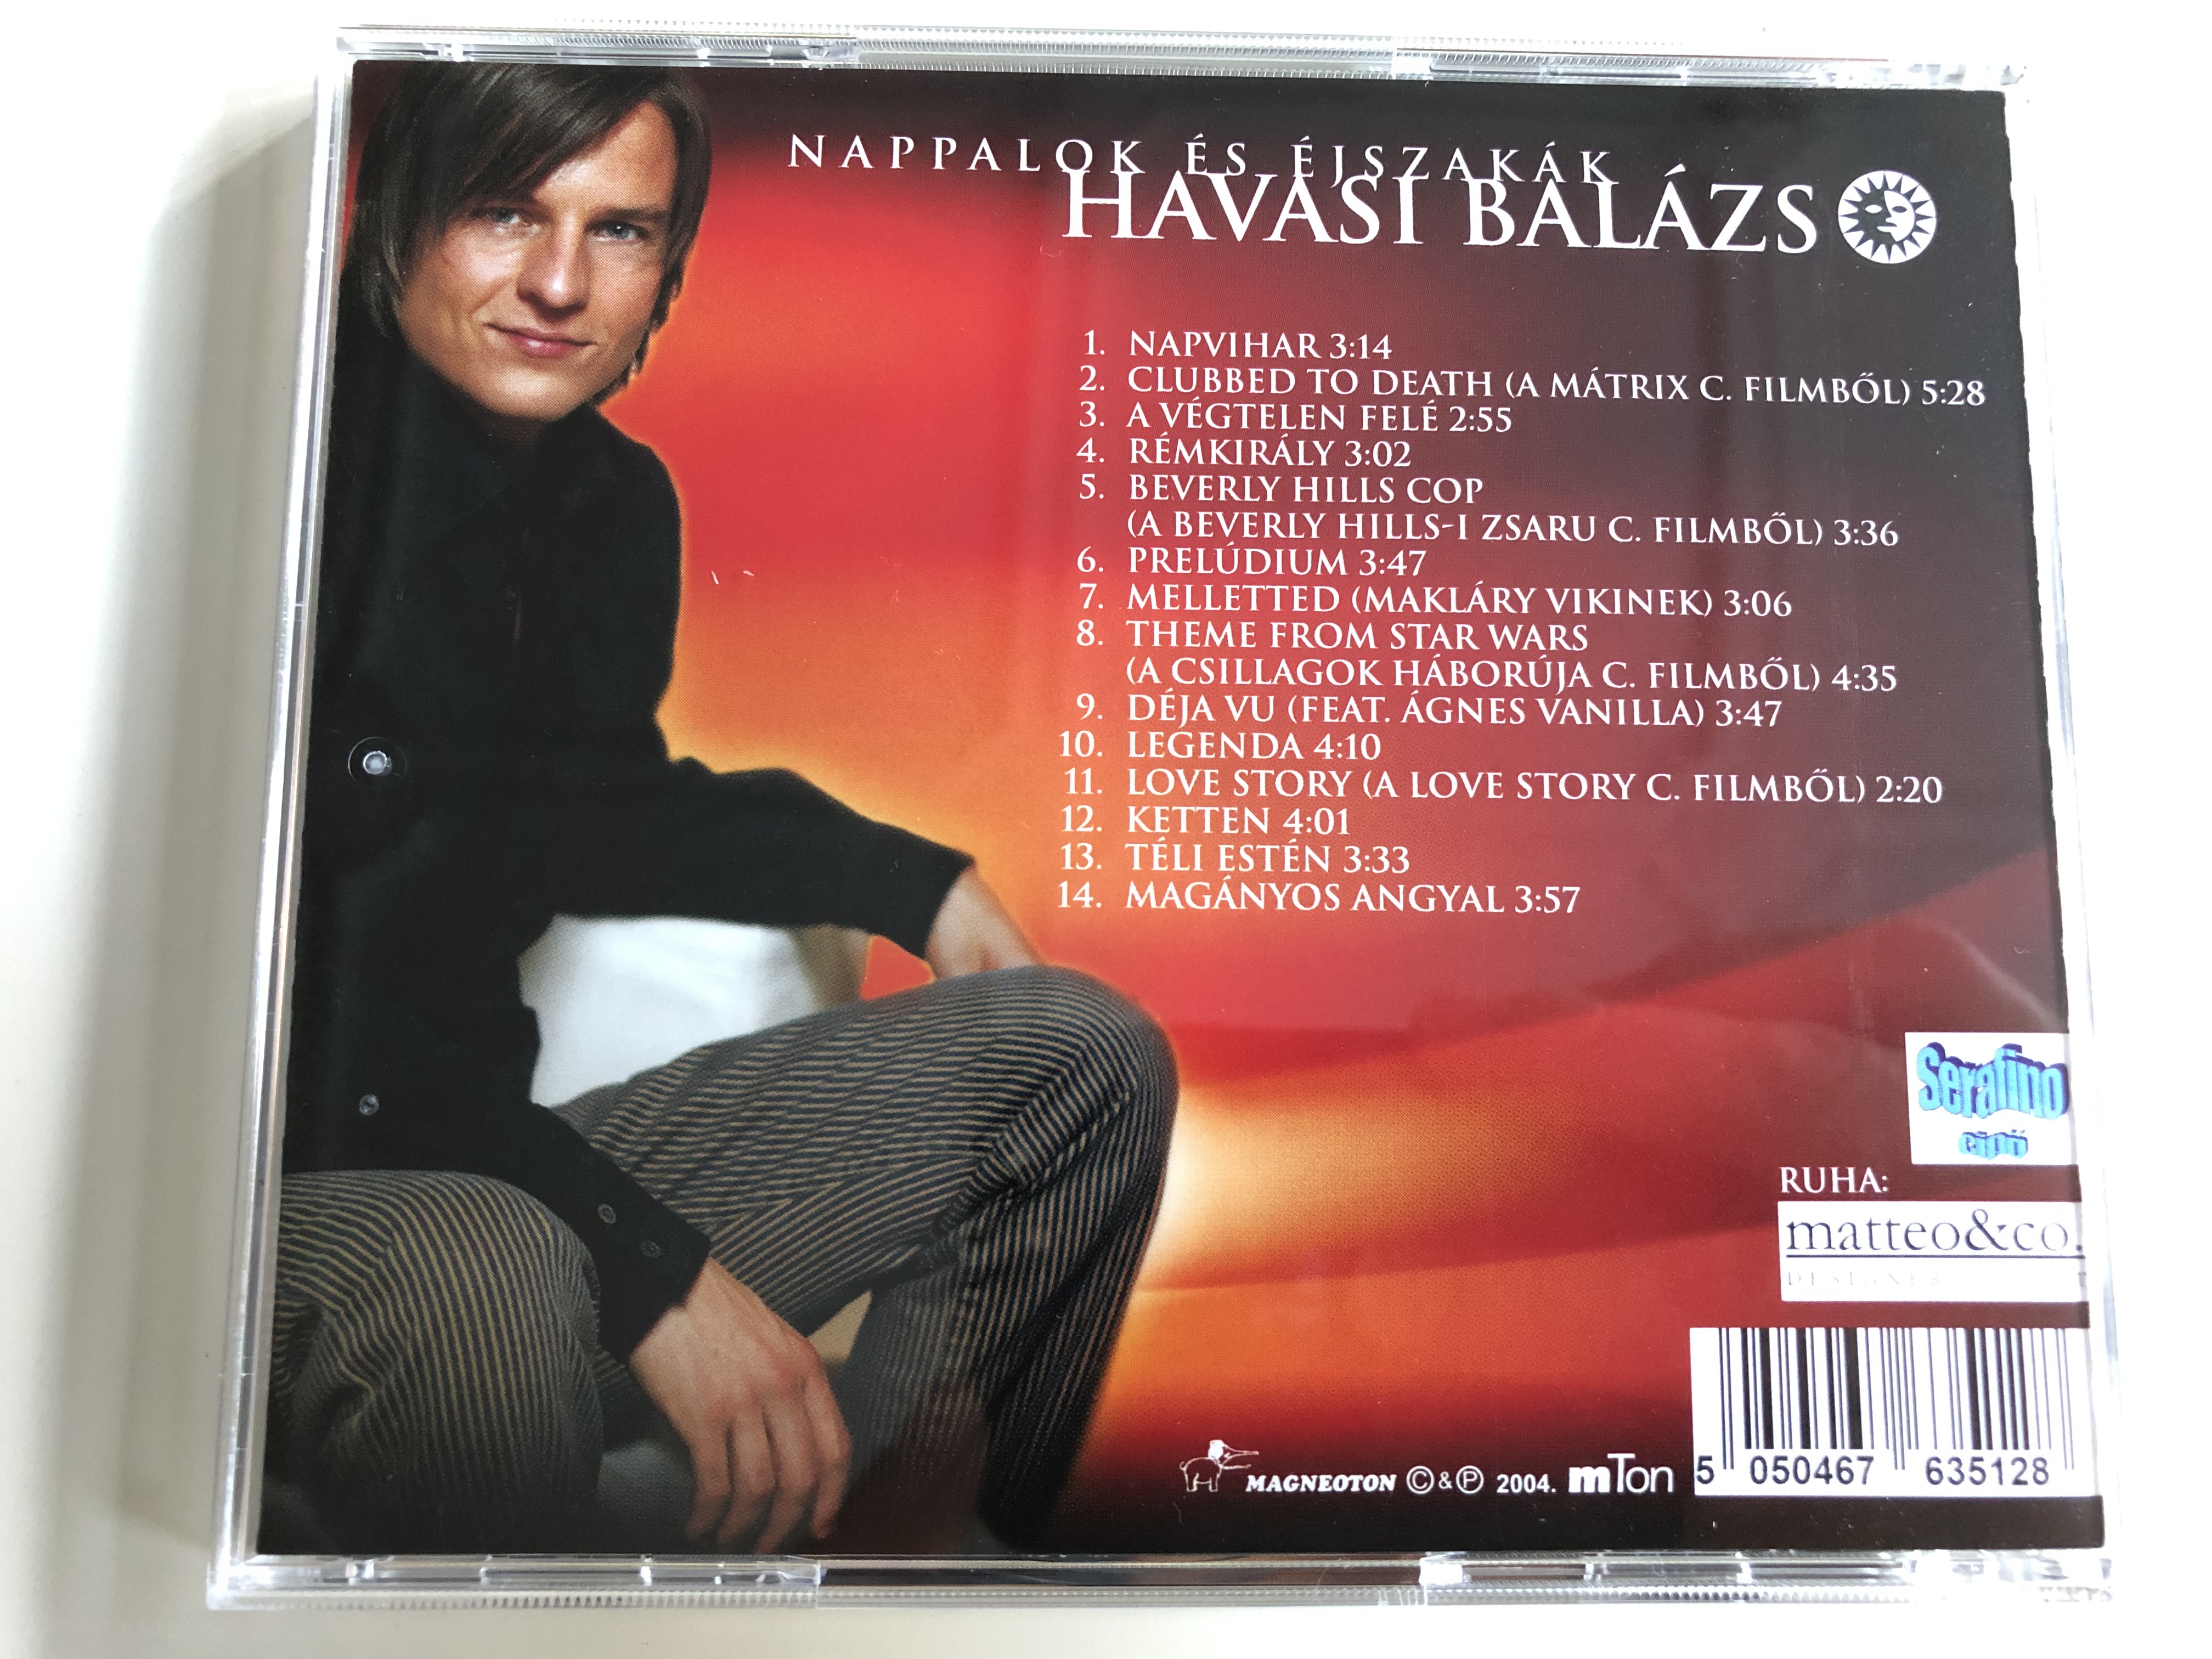 havasi-bal-zs-nappalok-s-jszak-k-koloss-krisztina-cello-audio-cd-2004-magneoton-8-.jpg